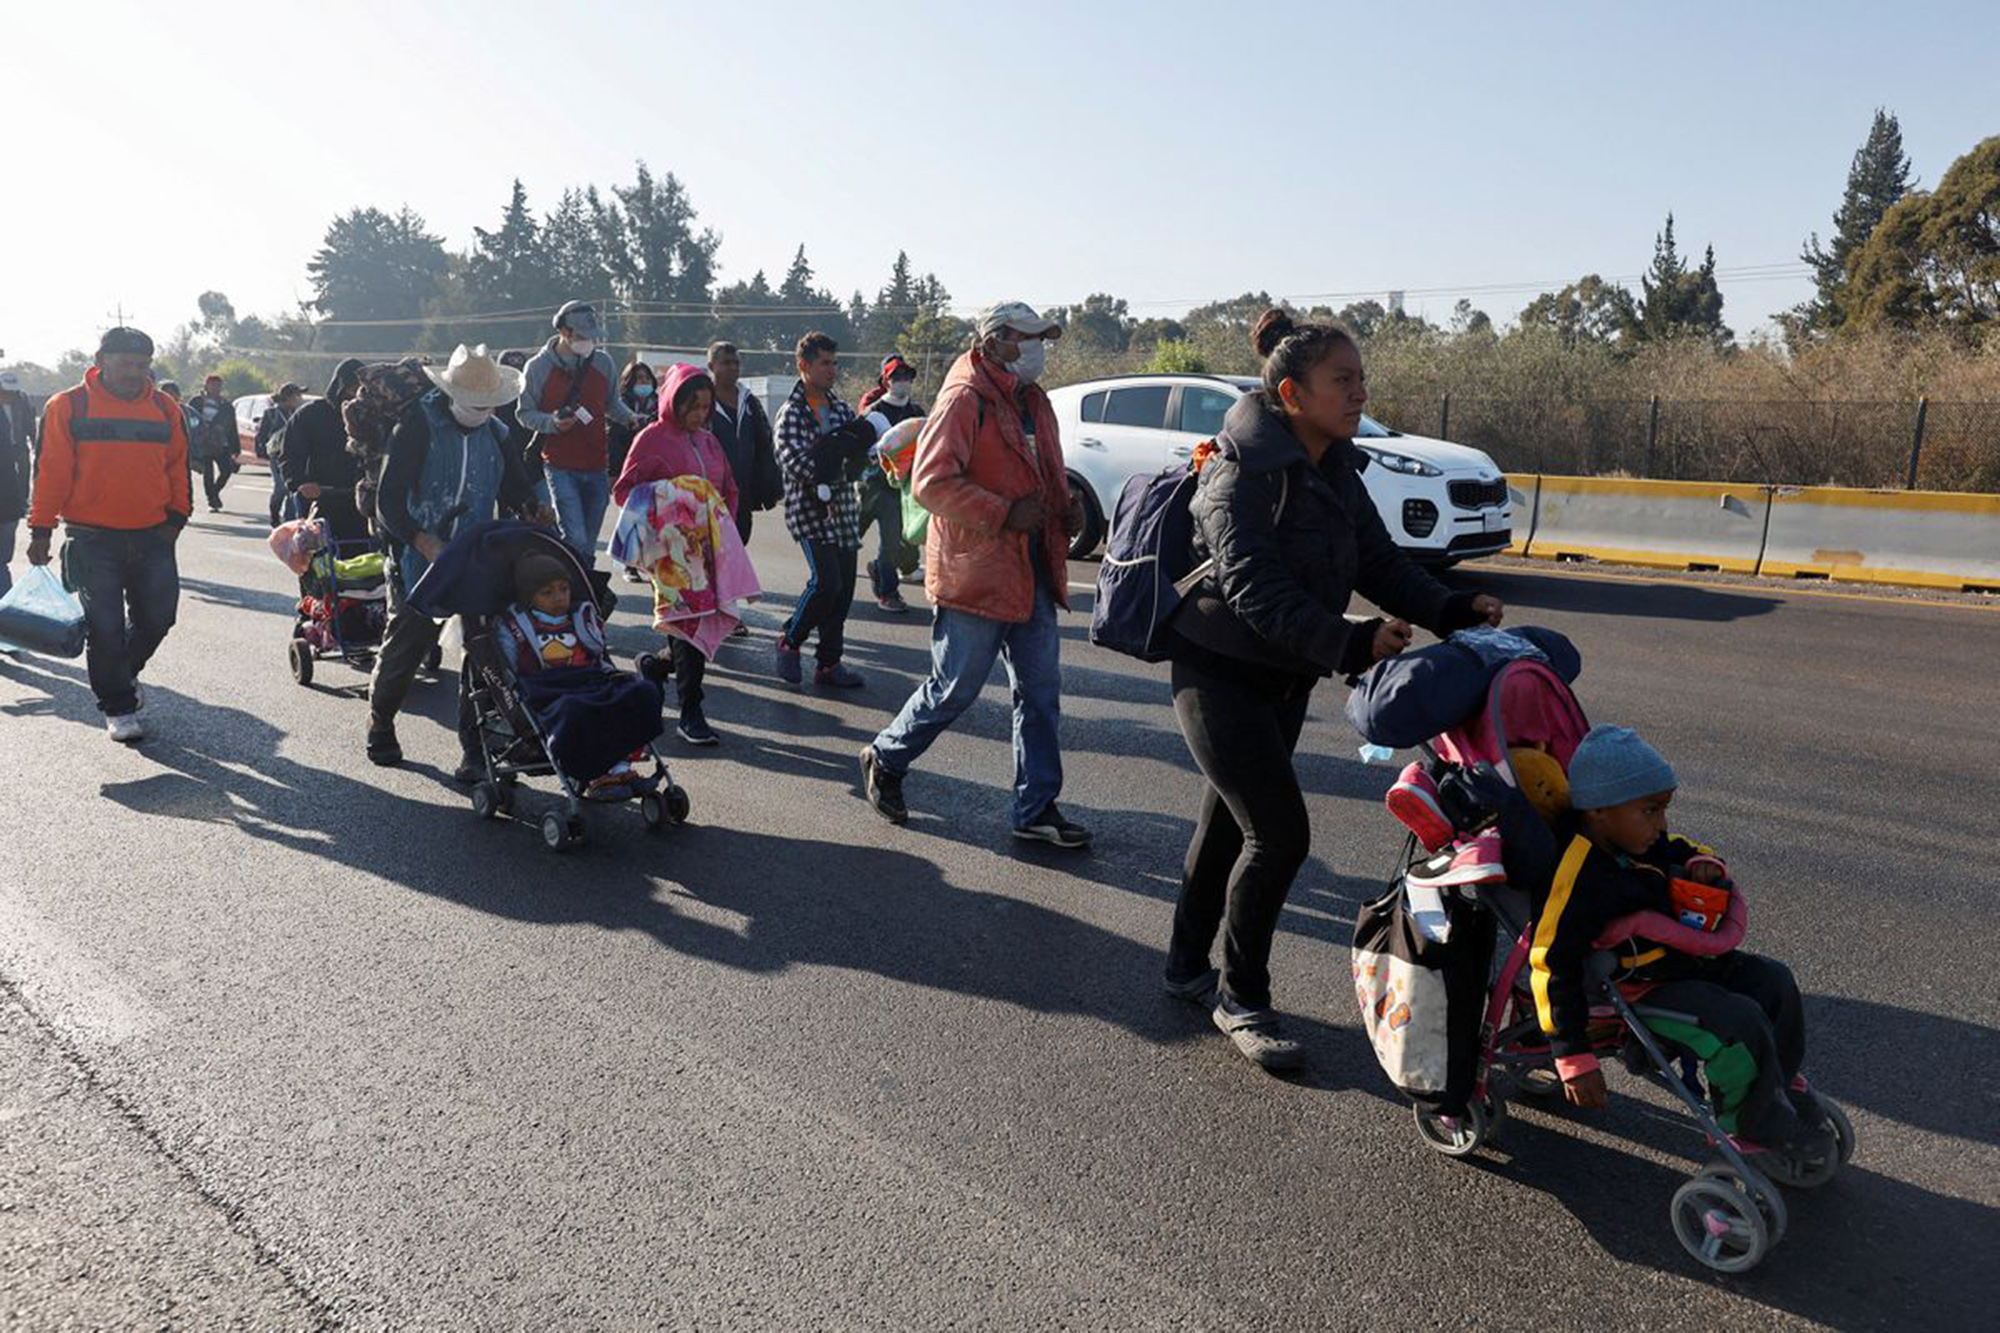 México to impose visa requirement on Venezuelans to stem migration